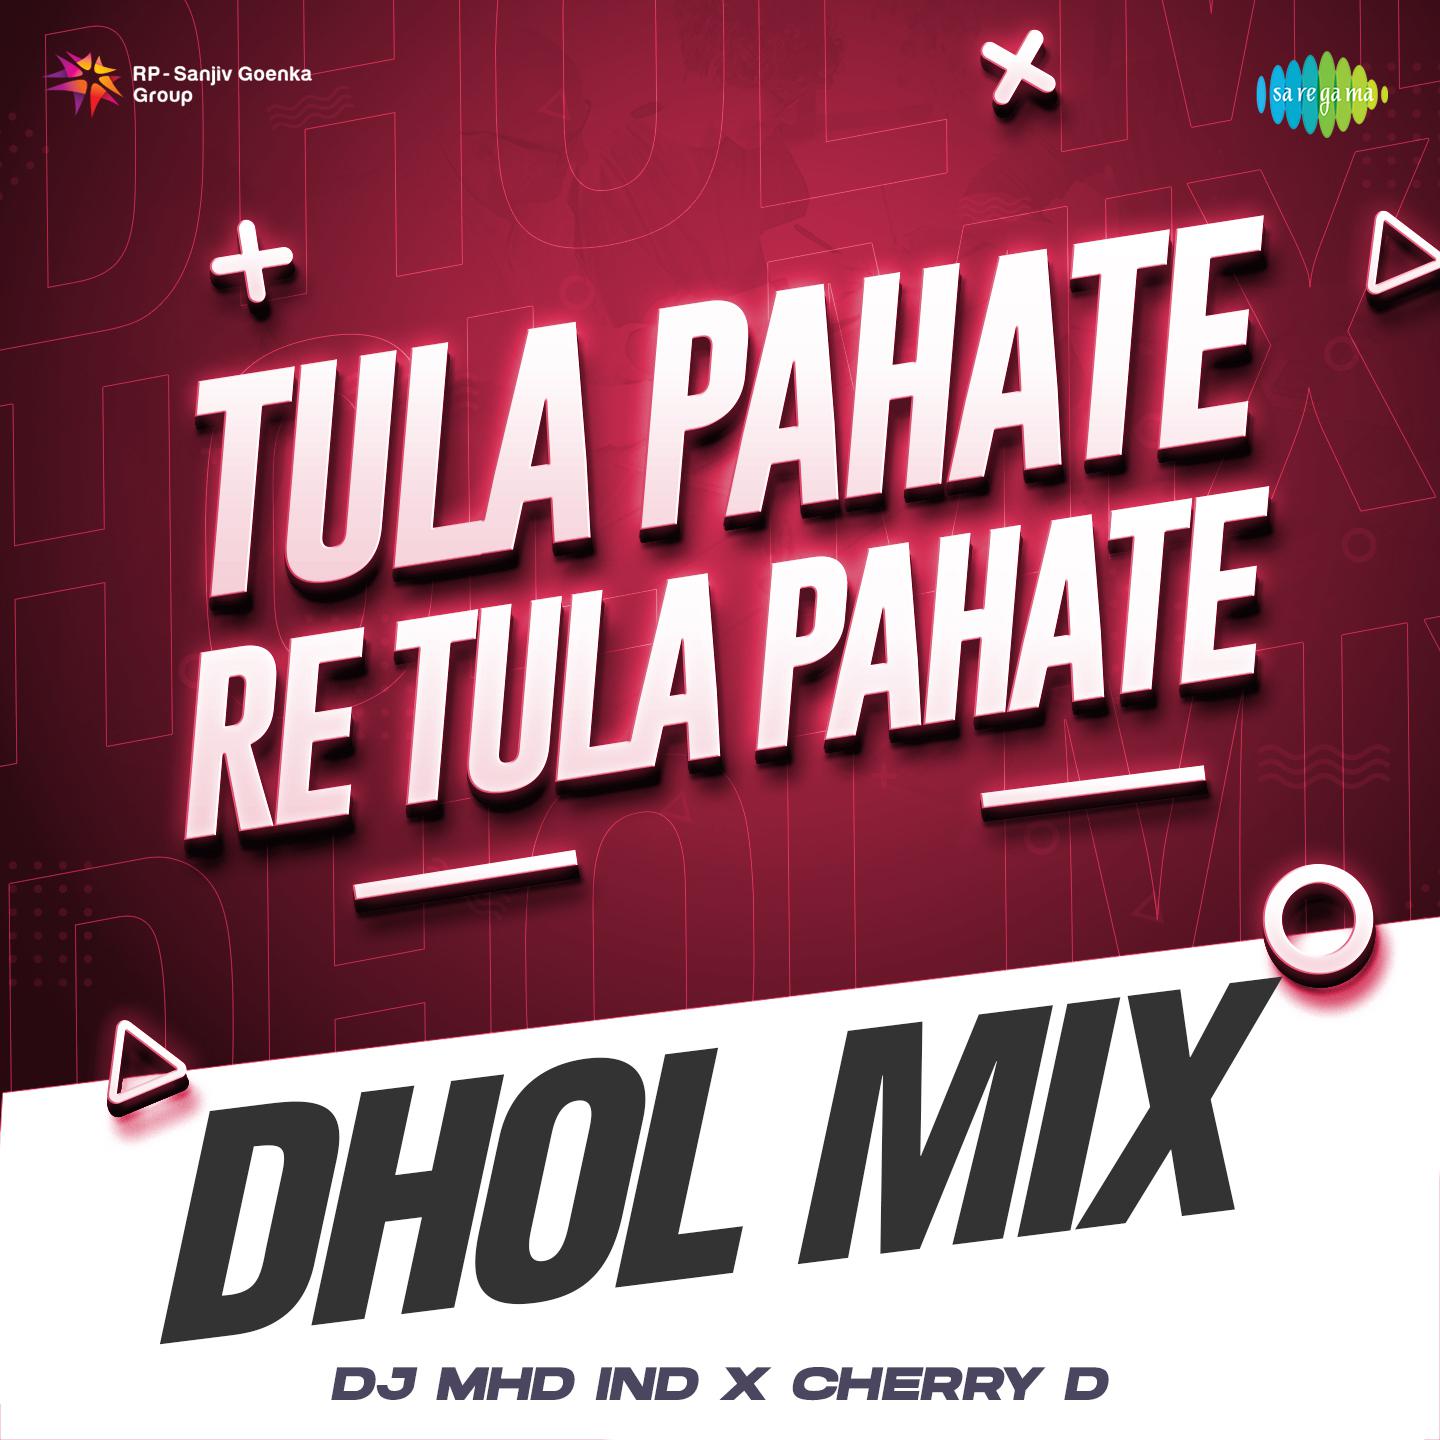 DJ MHD IND - Tula Pahate Re Tula Pahate - Dhol Mix